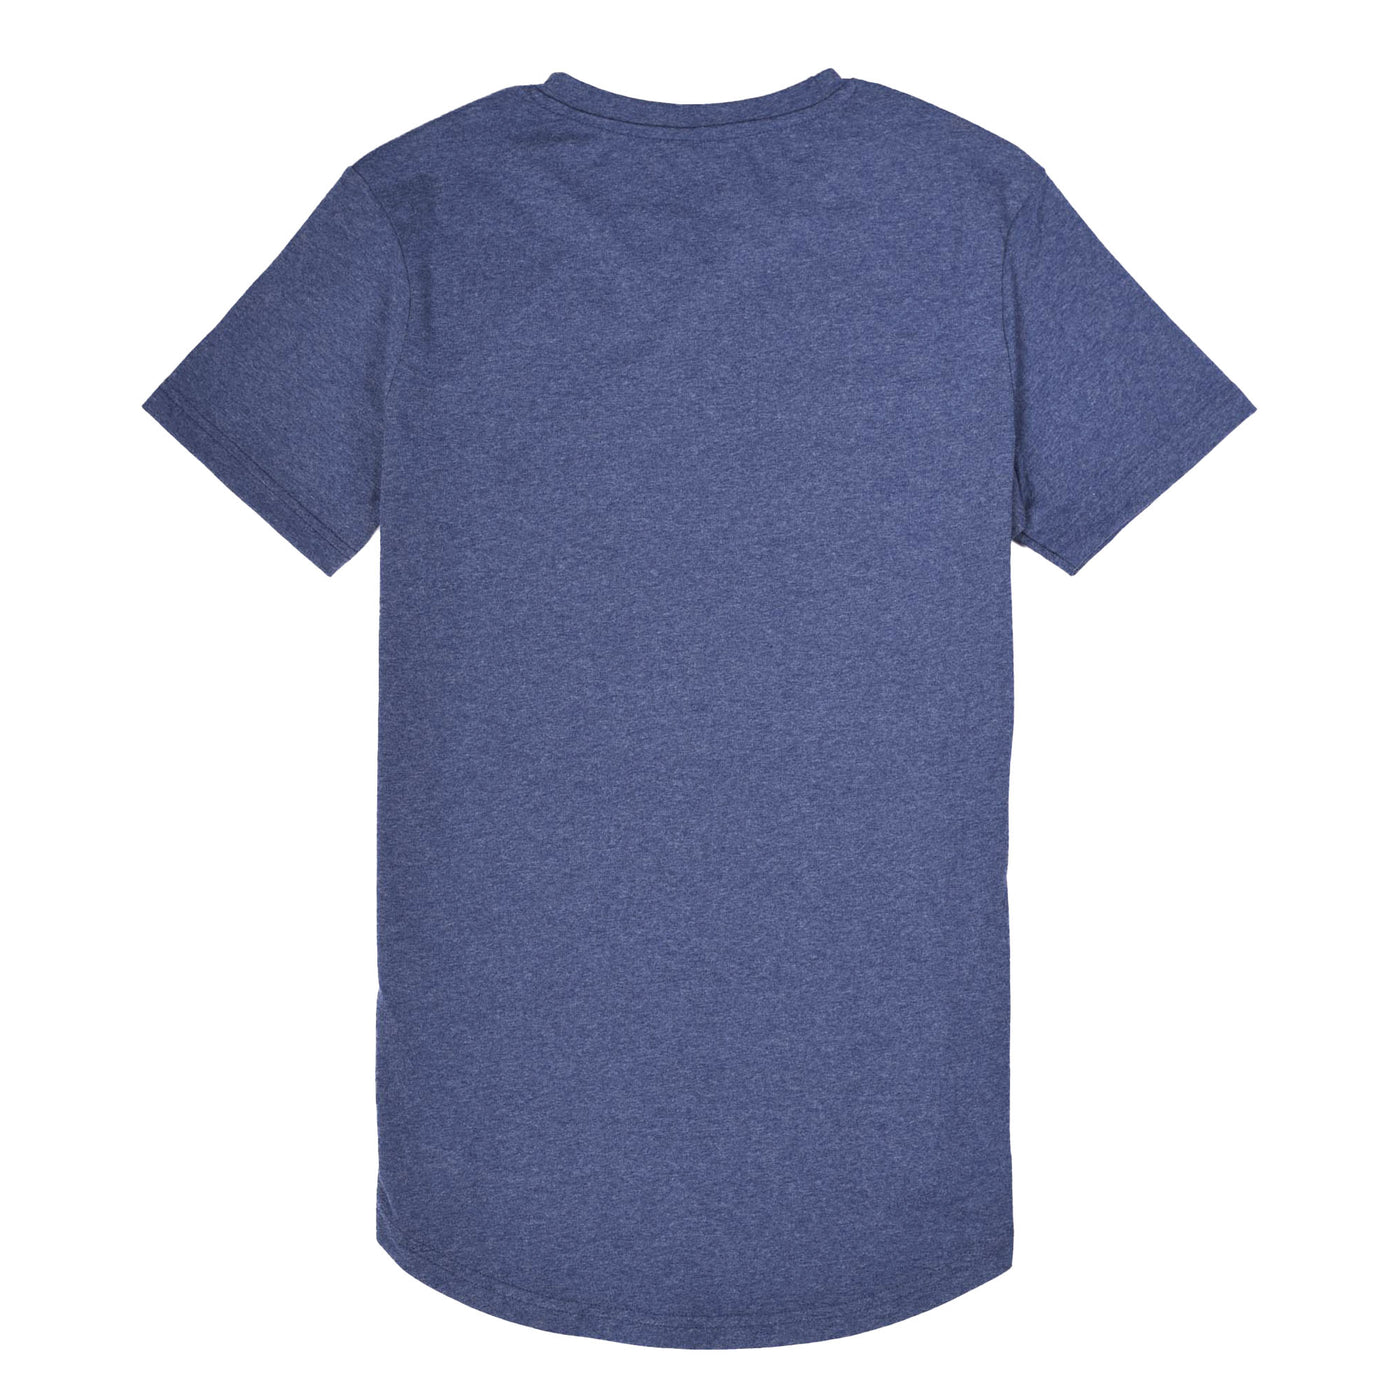 T-Shirt To Go larga - azul